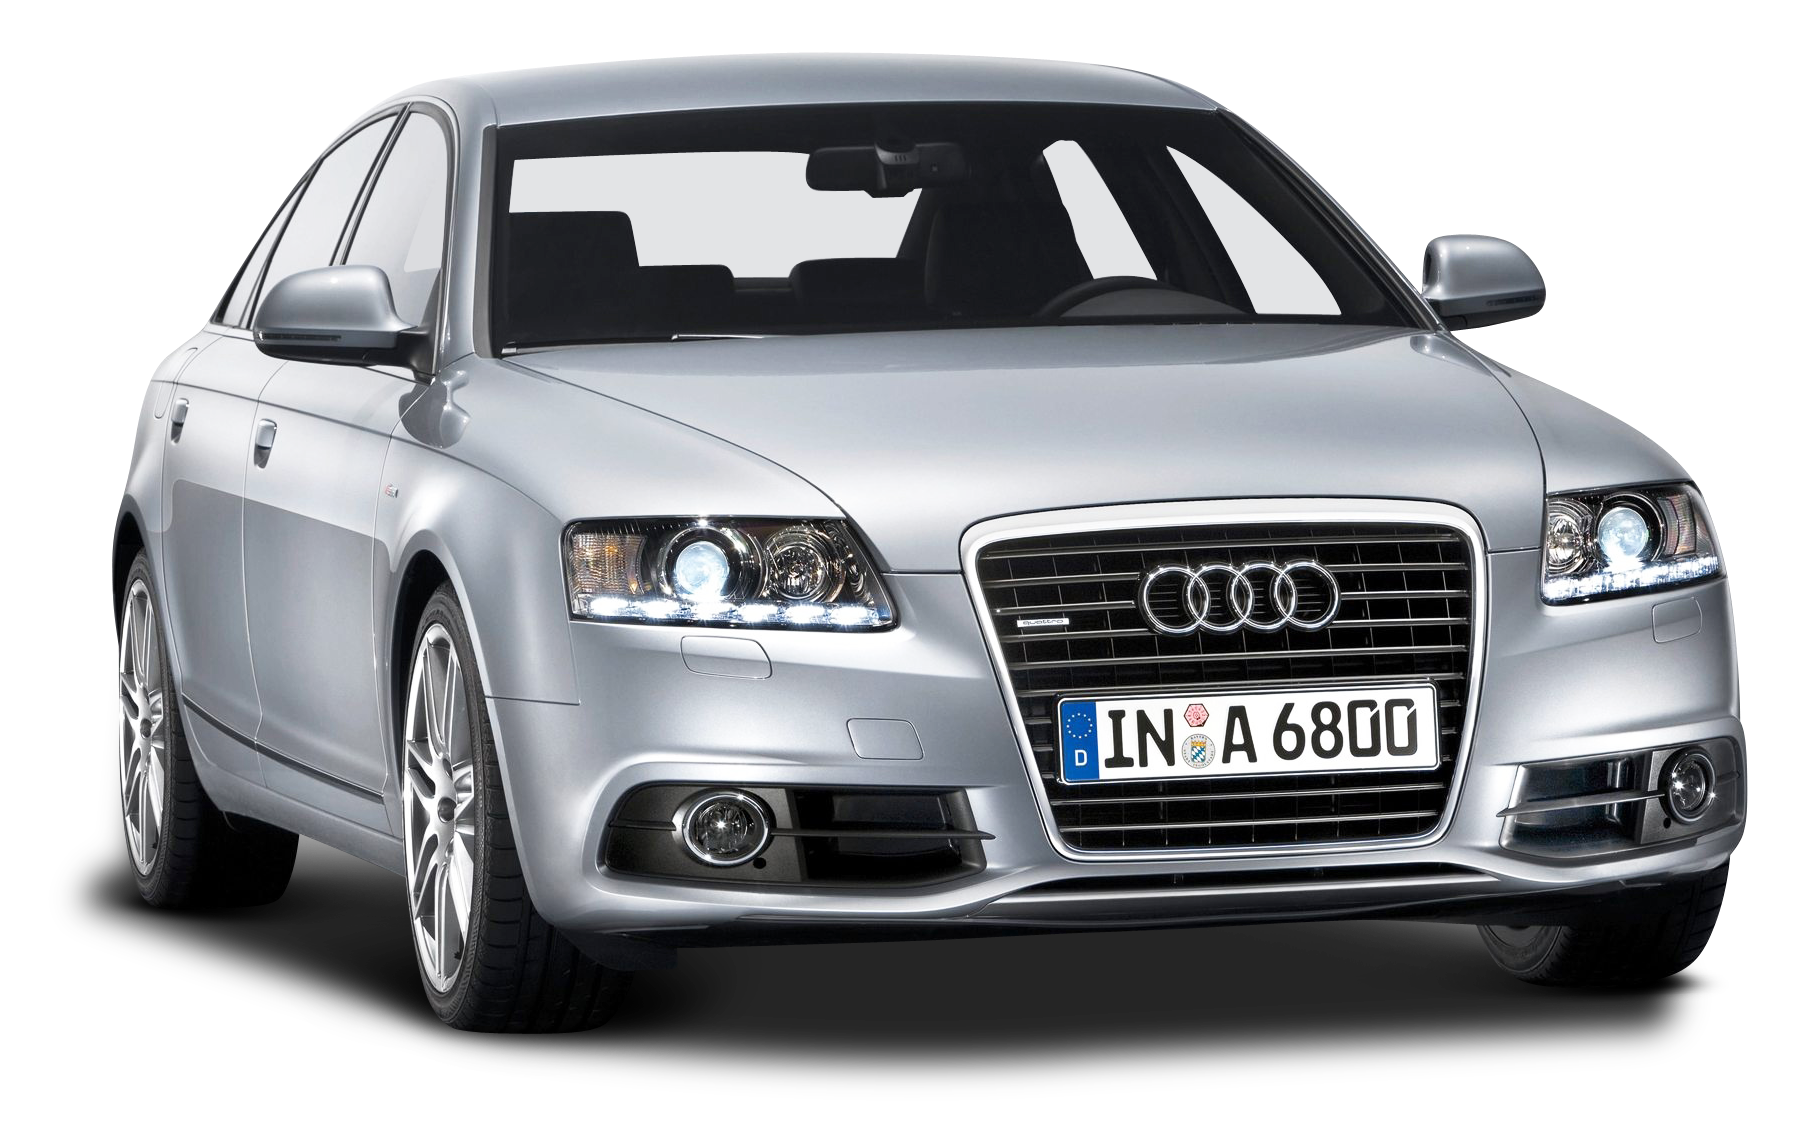 Audi A6 PNG High-Quality Image